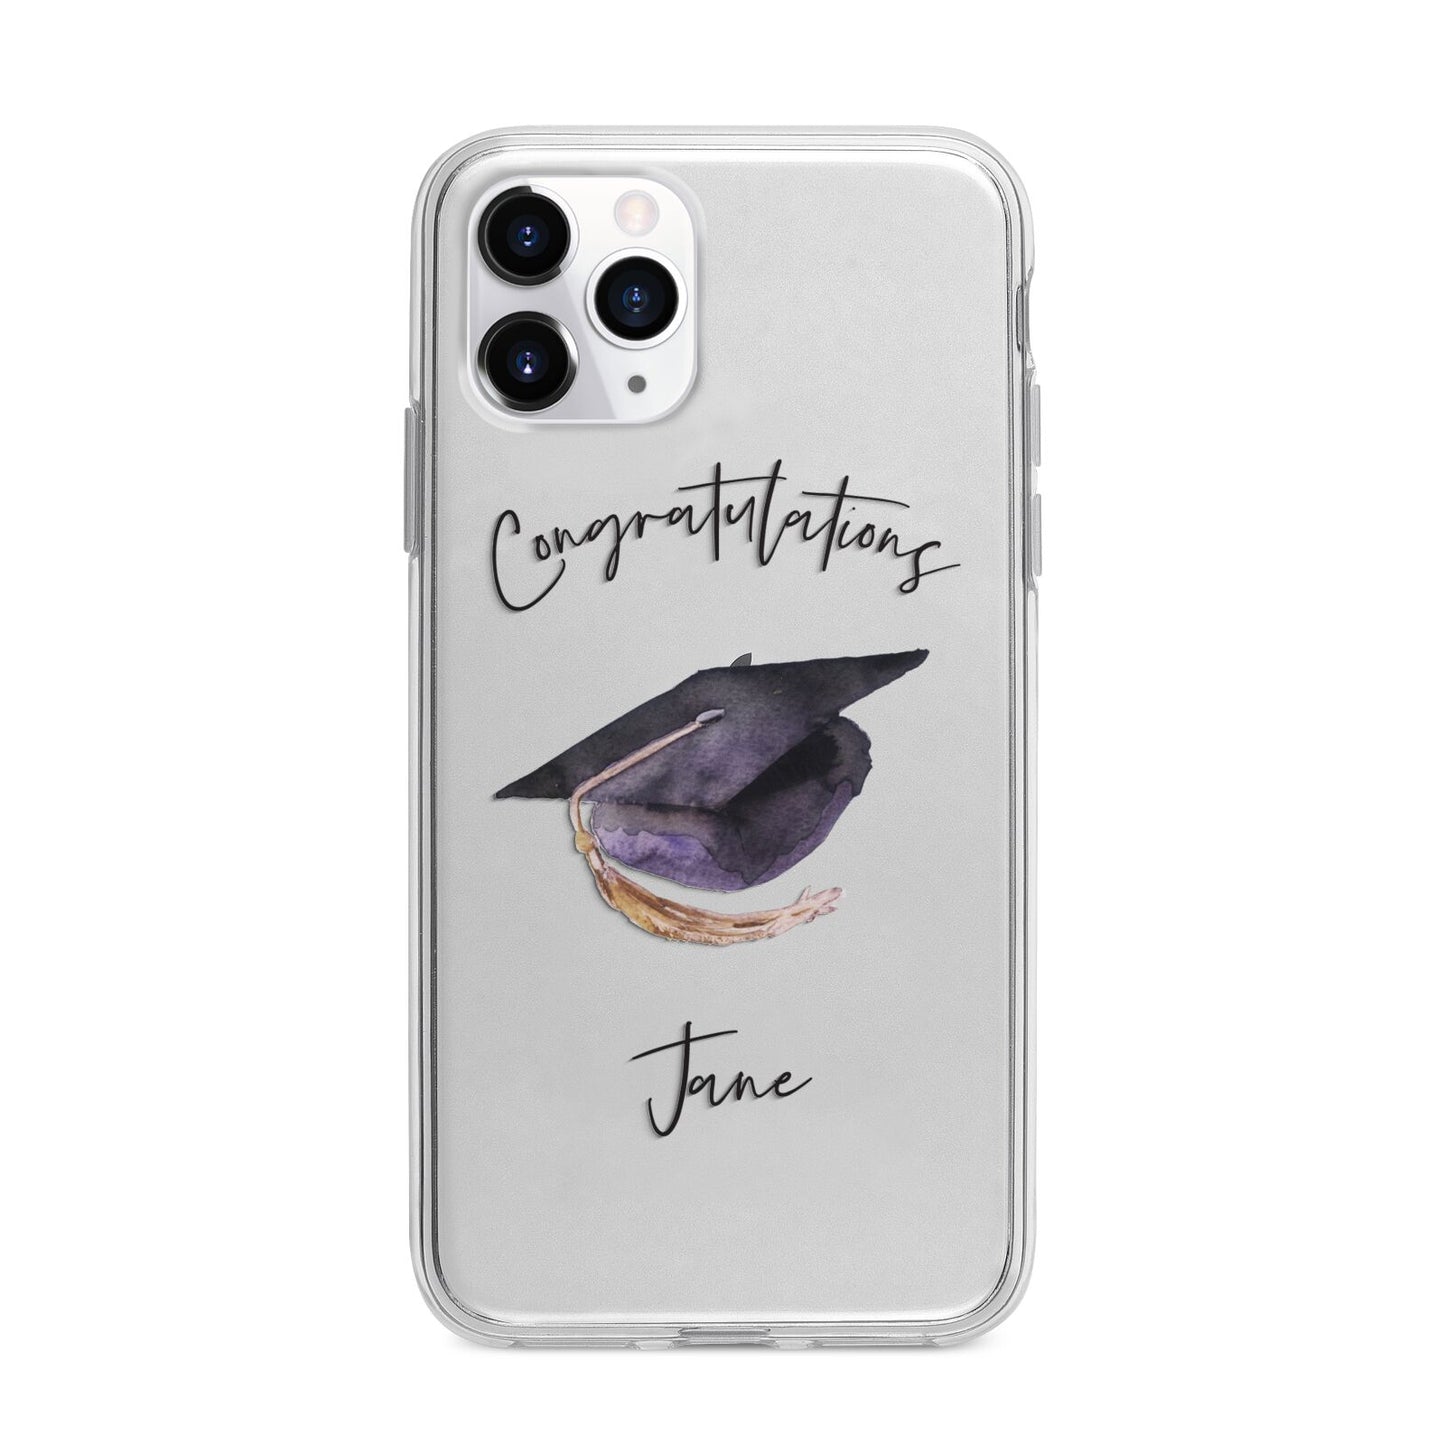 Congratulations Graduate Custom Apple iPhone 11 Pro in Silver with Bumper Case